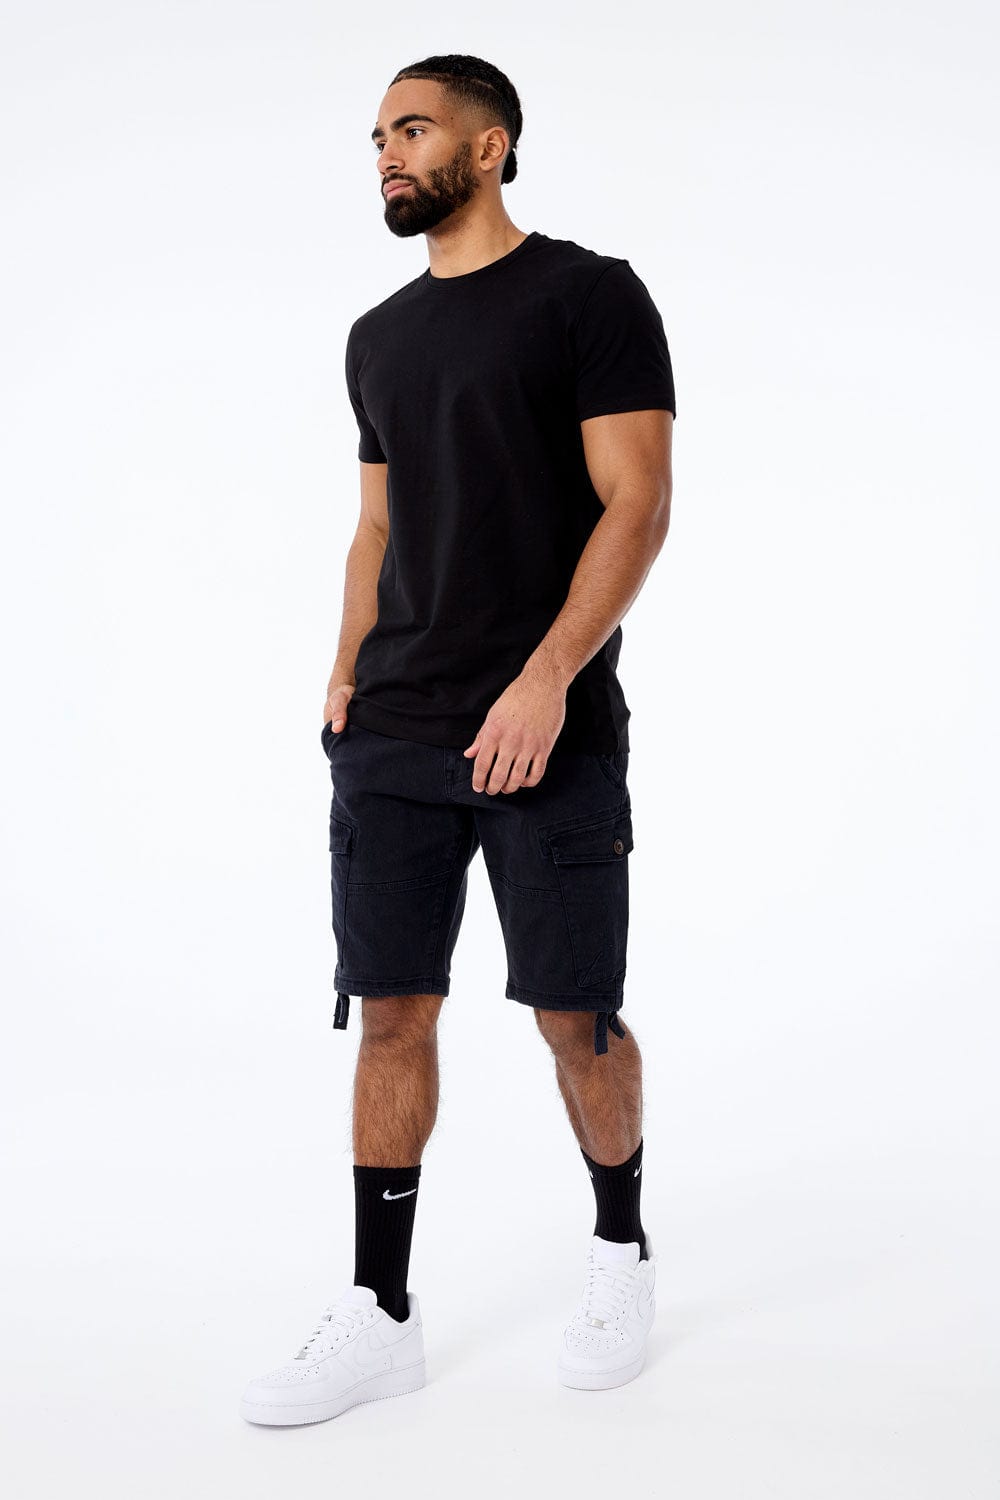 Jordan Craig OG - Cargo Shorts (Navy)